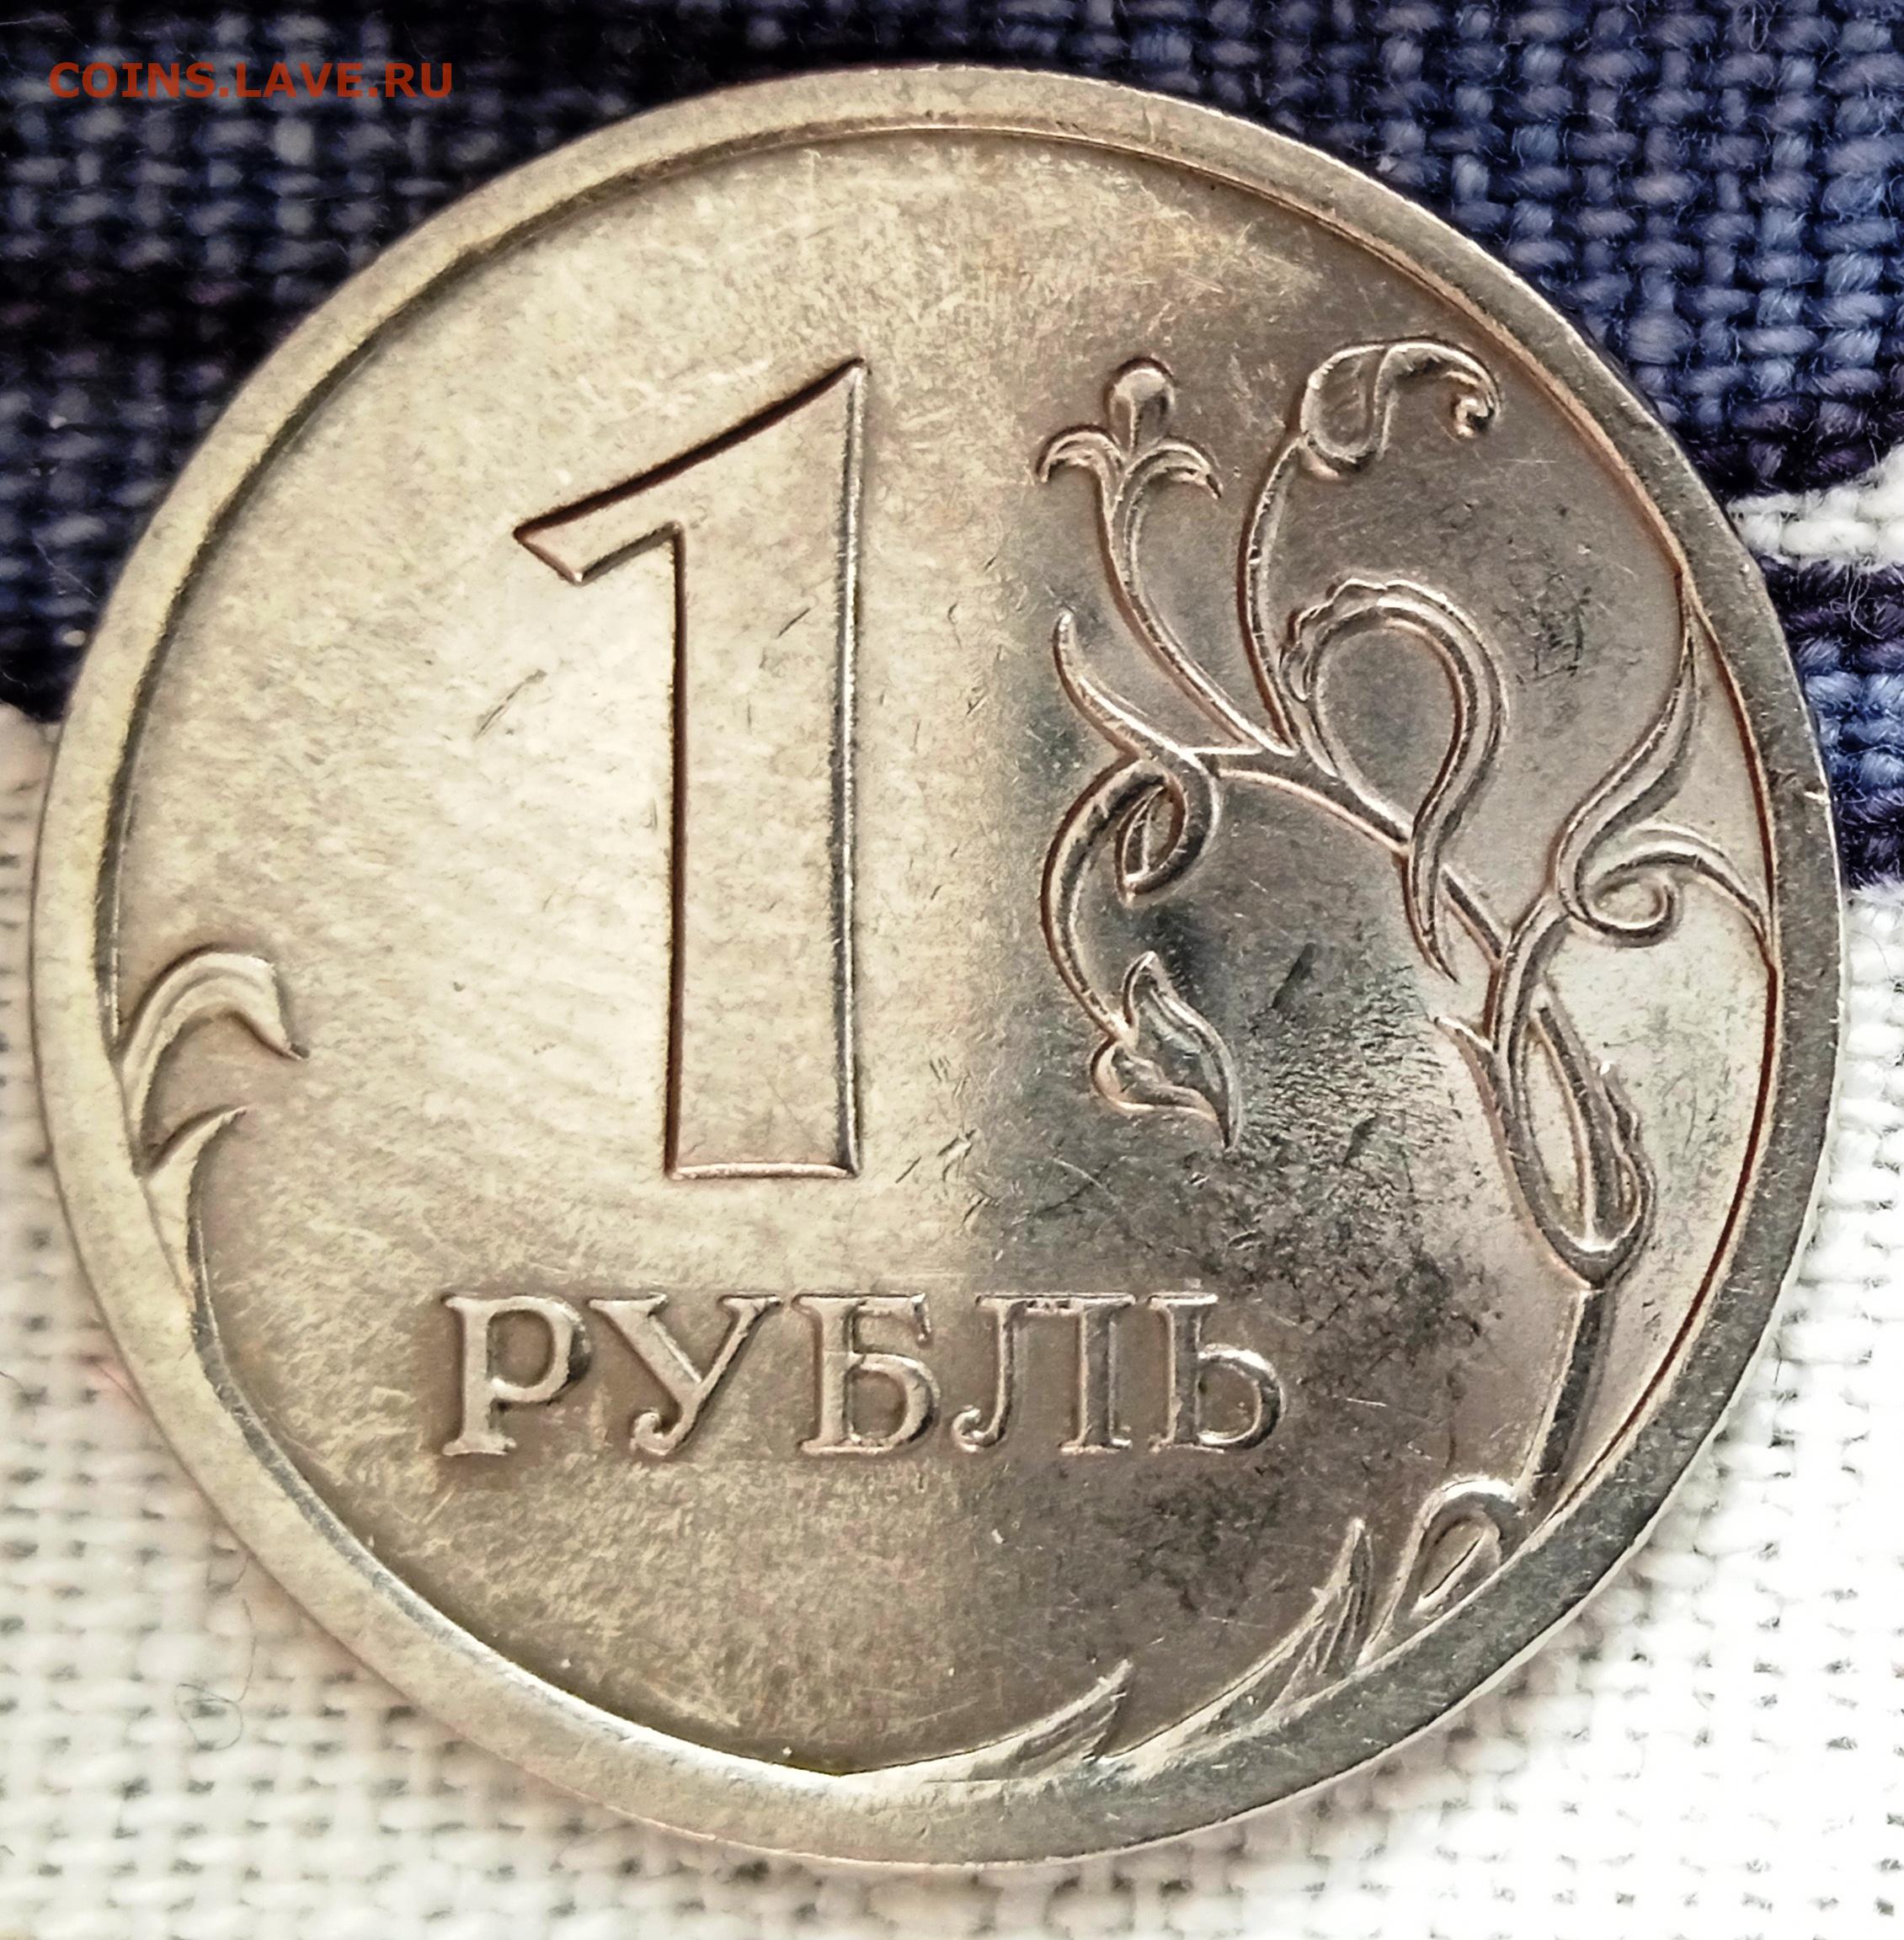 Рубль в 2010. Один рубль 2010. 1 Рубль шт 3.42. Беларусь 1 рубль, 2010. 1 Рубль шт 3.25.